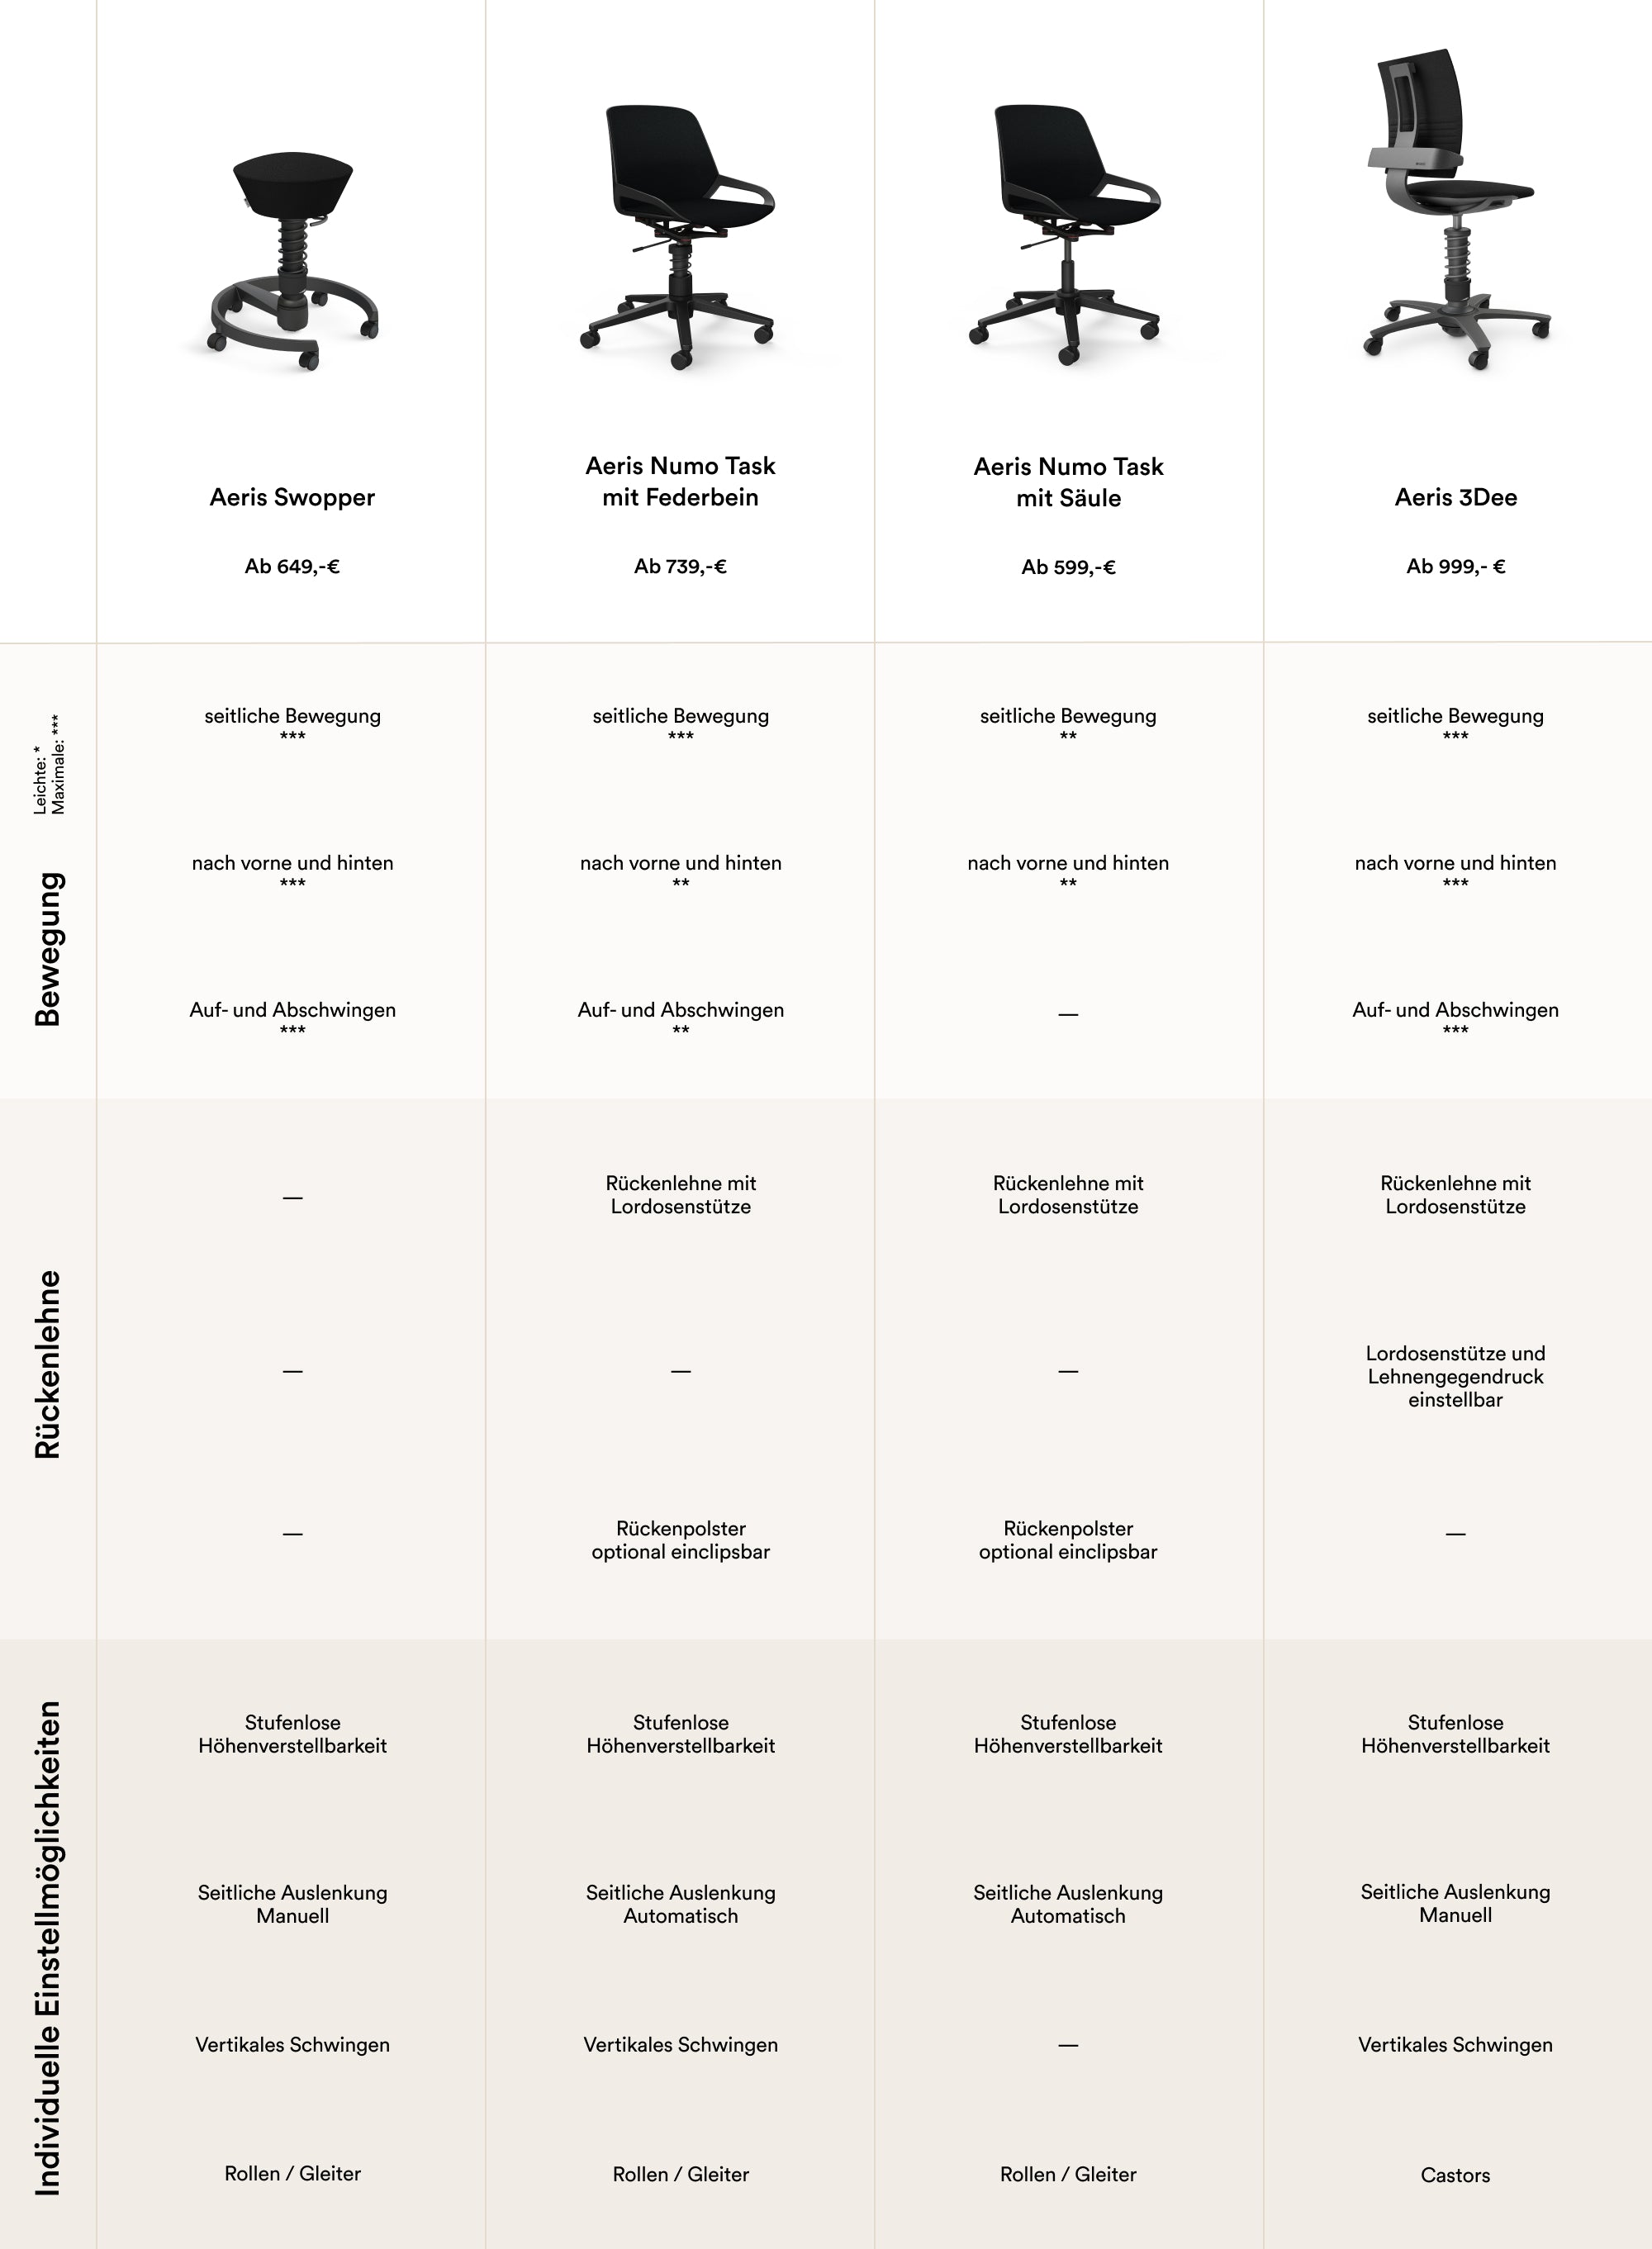 Graphic comparison of the Aeris office chairs Aeris Swopper Aeris Numo Task  and Aeris 3Dee